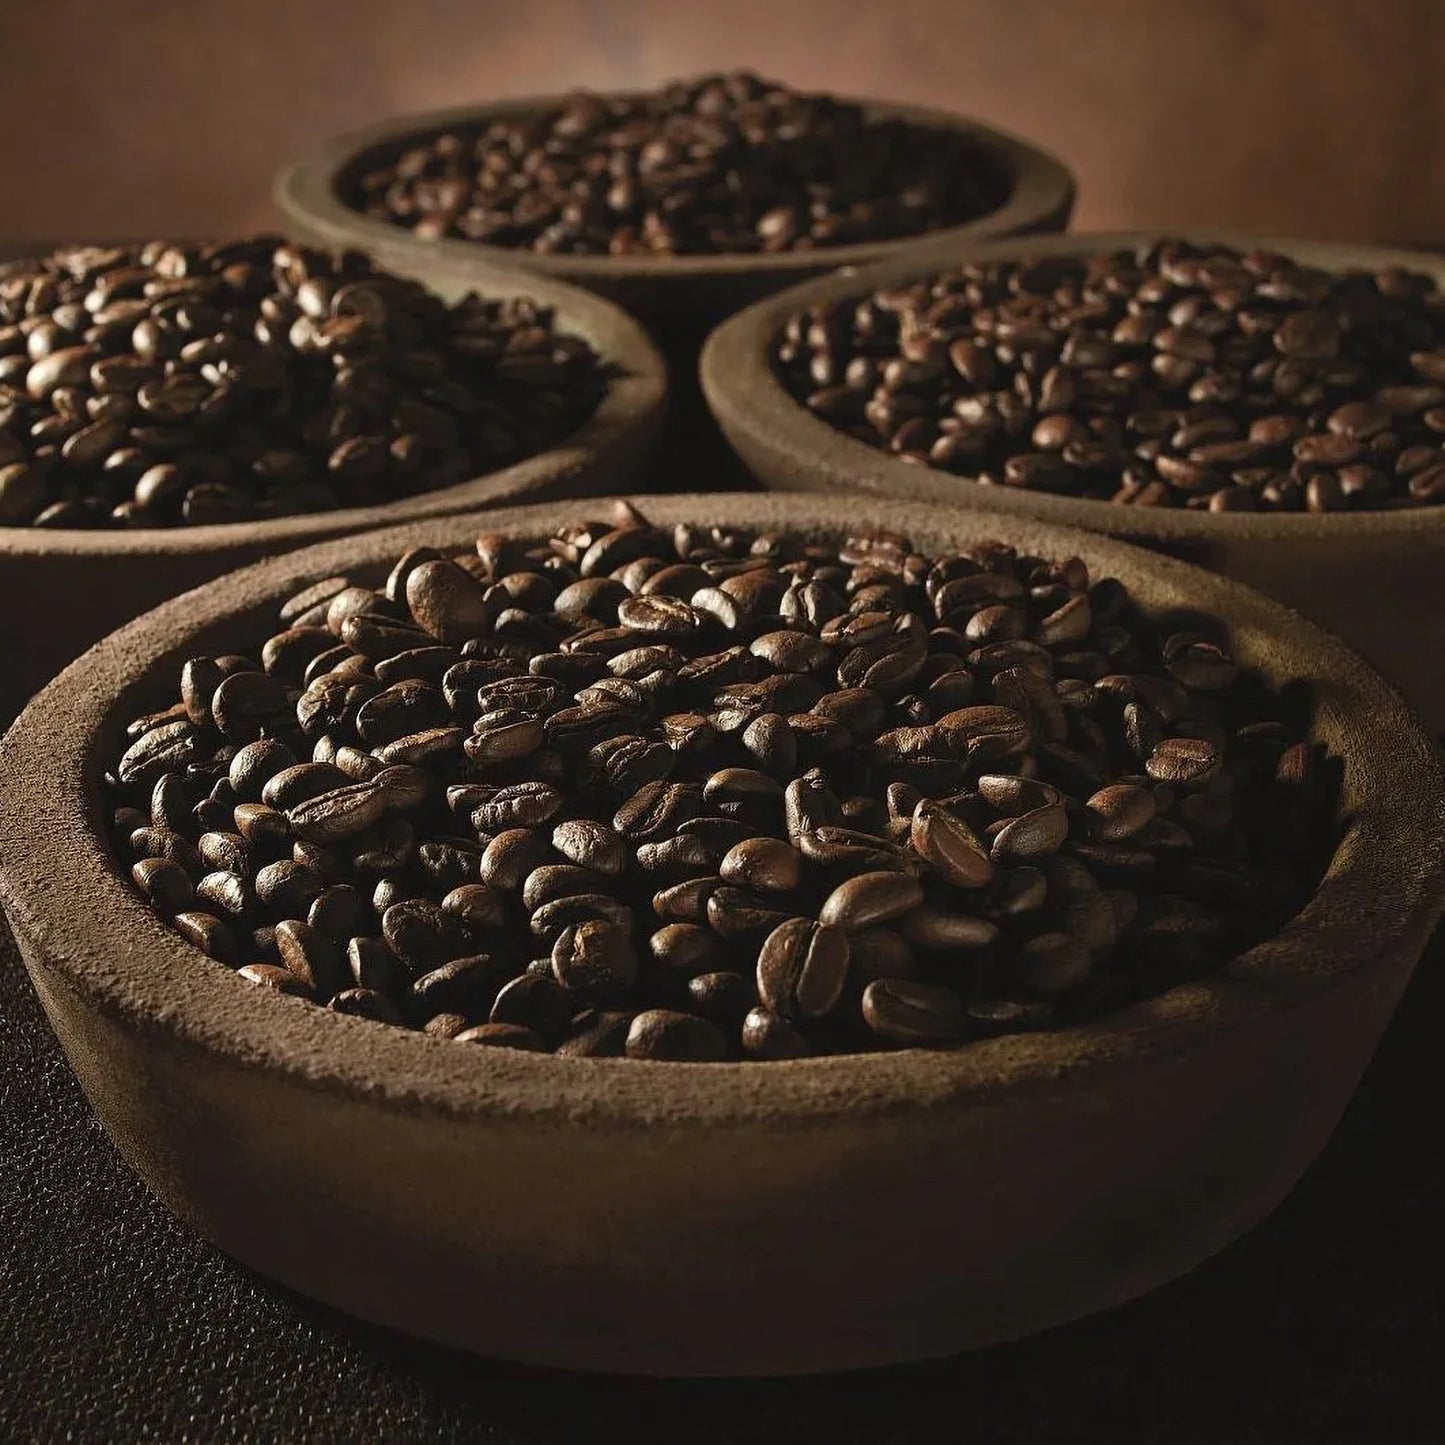 Caffè in grani - 1kg . Monorigine Guatemala Antigua.